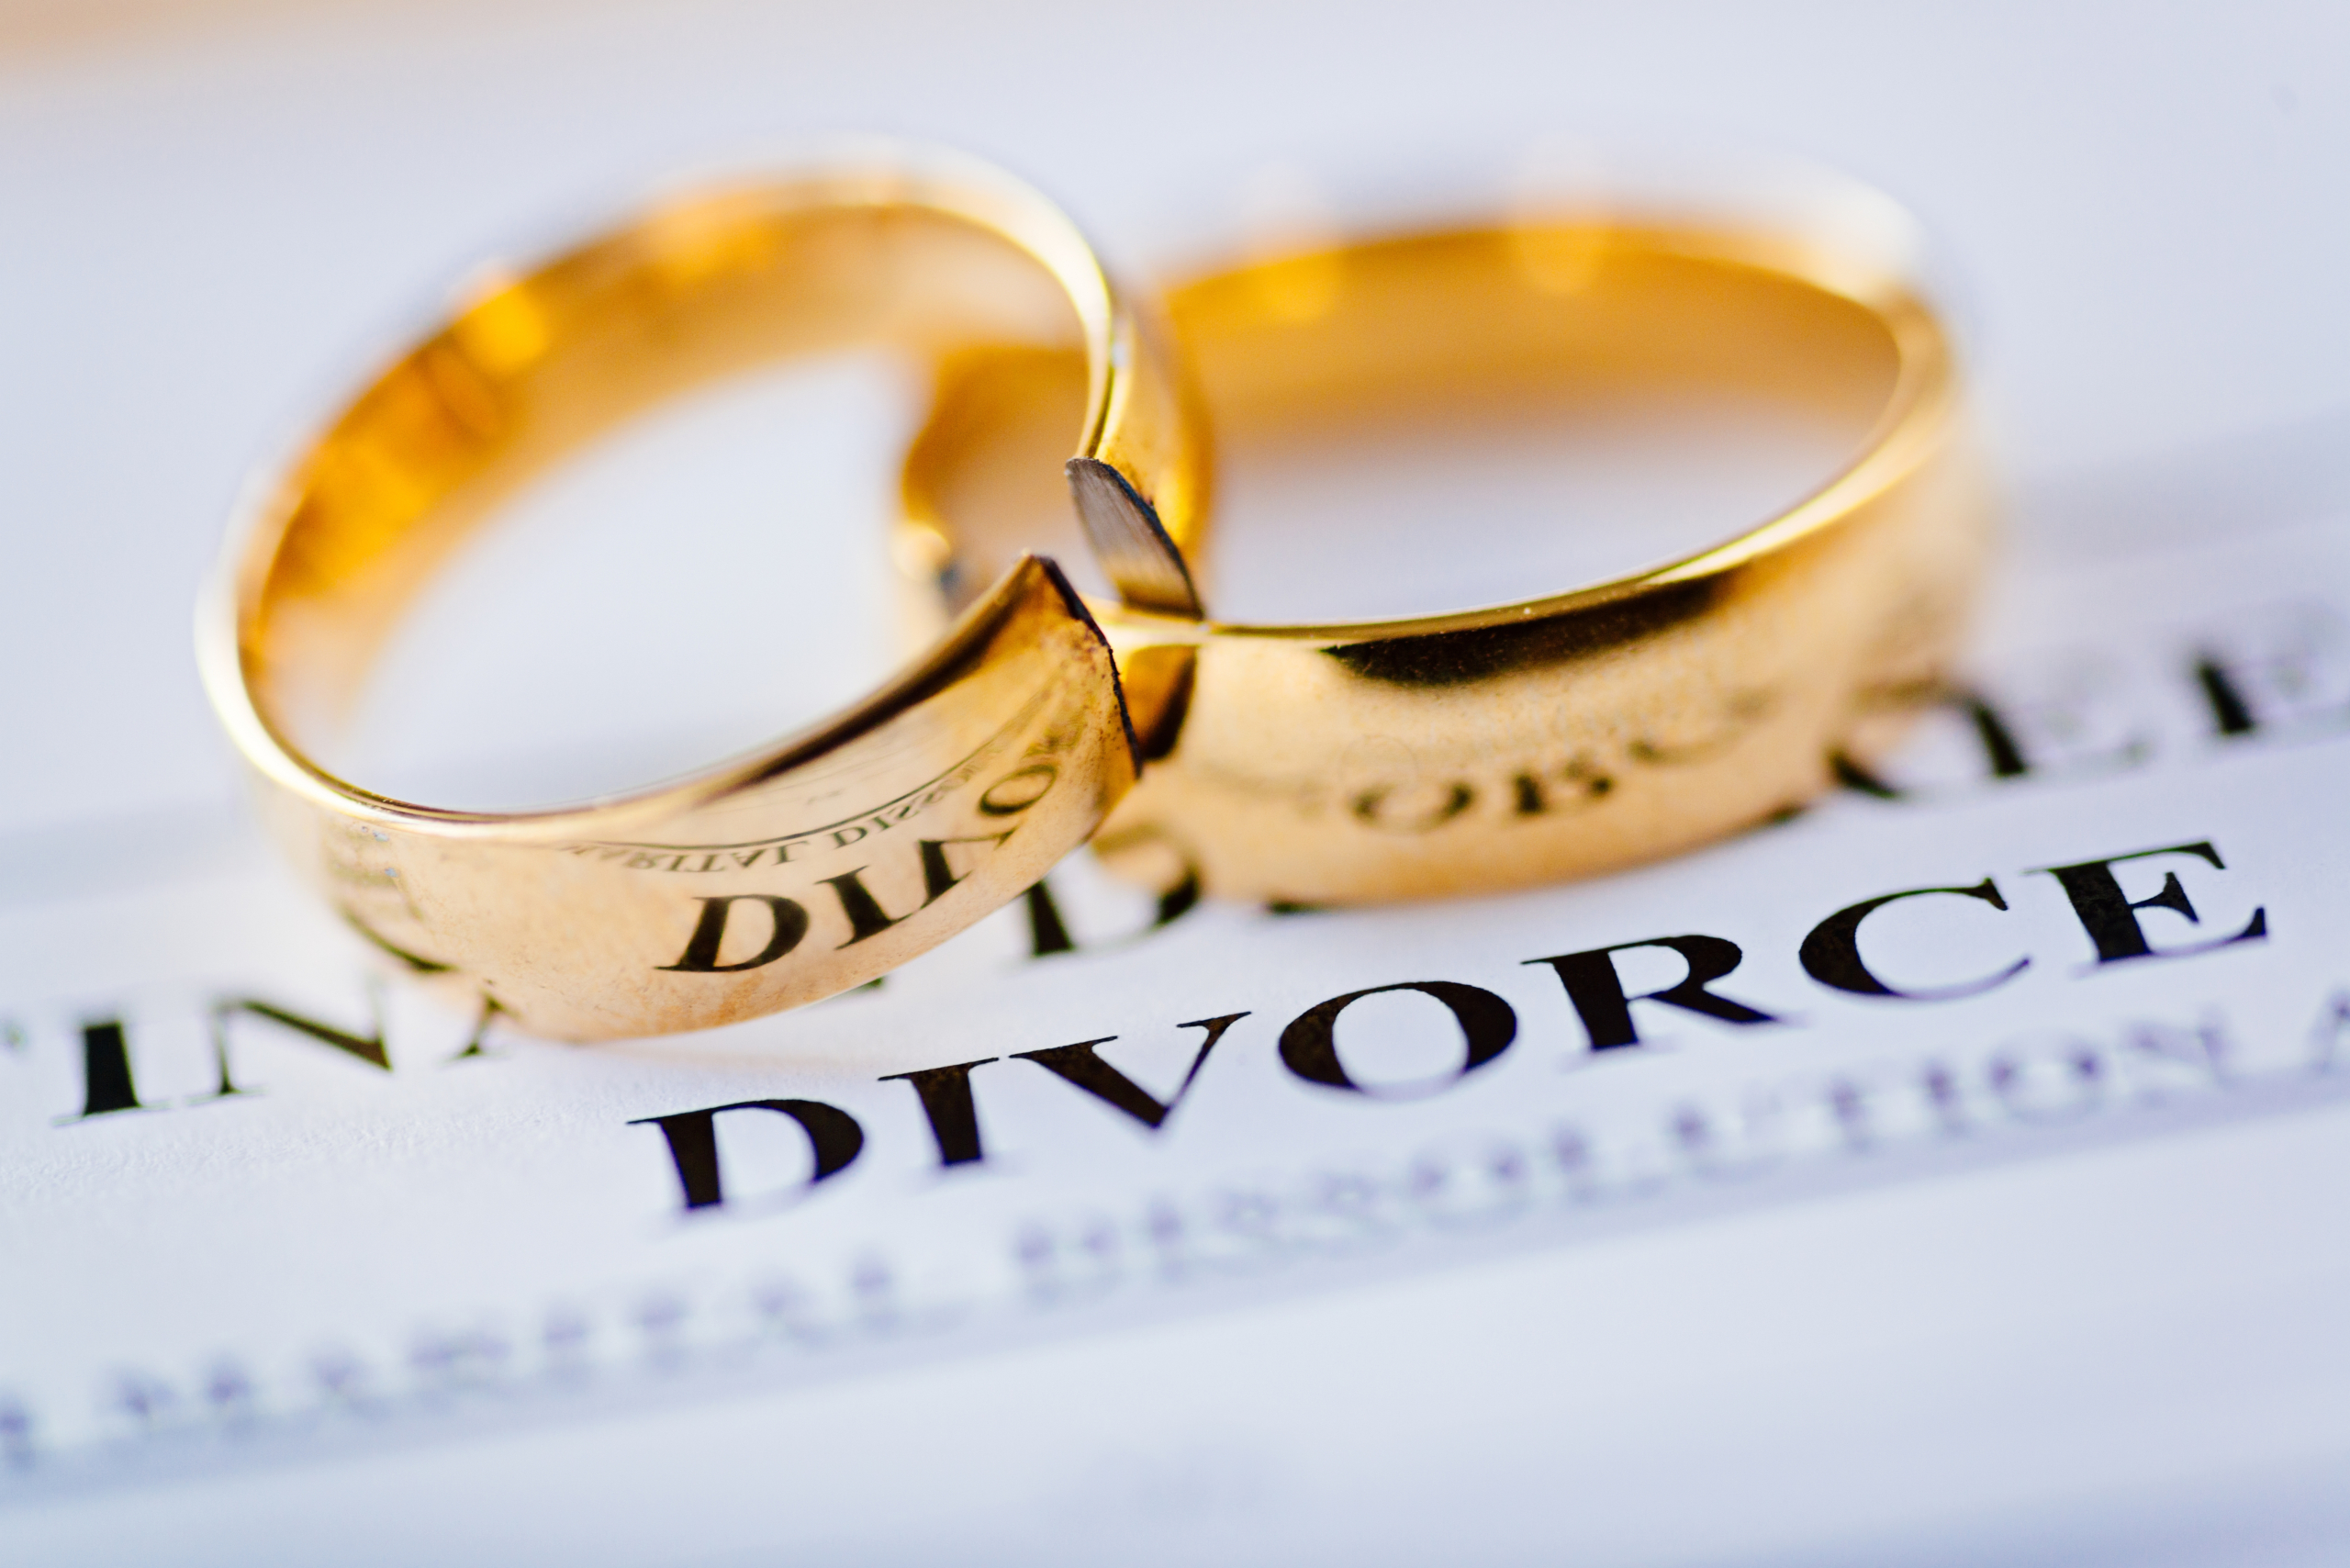 Divorce in Connecticut